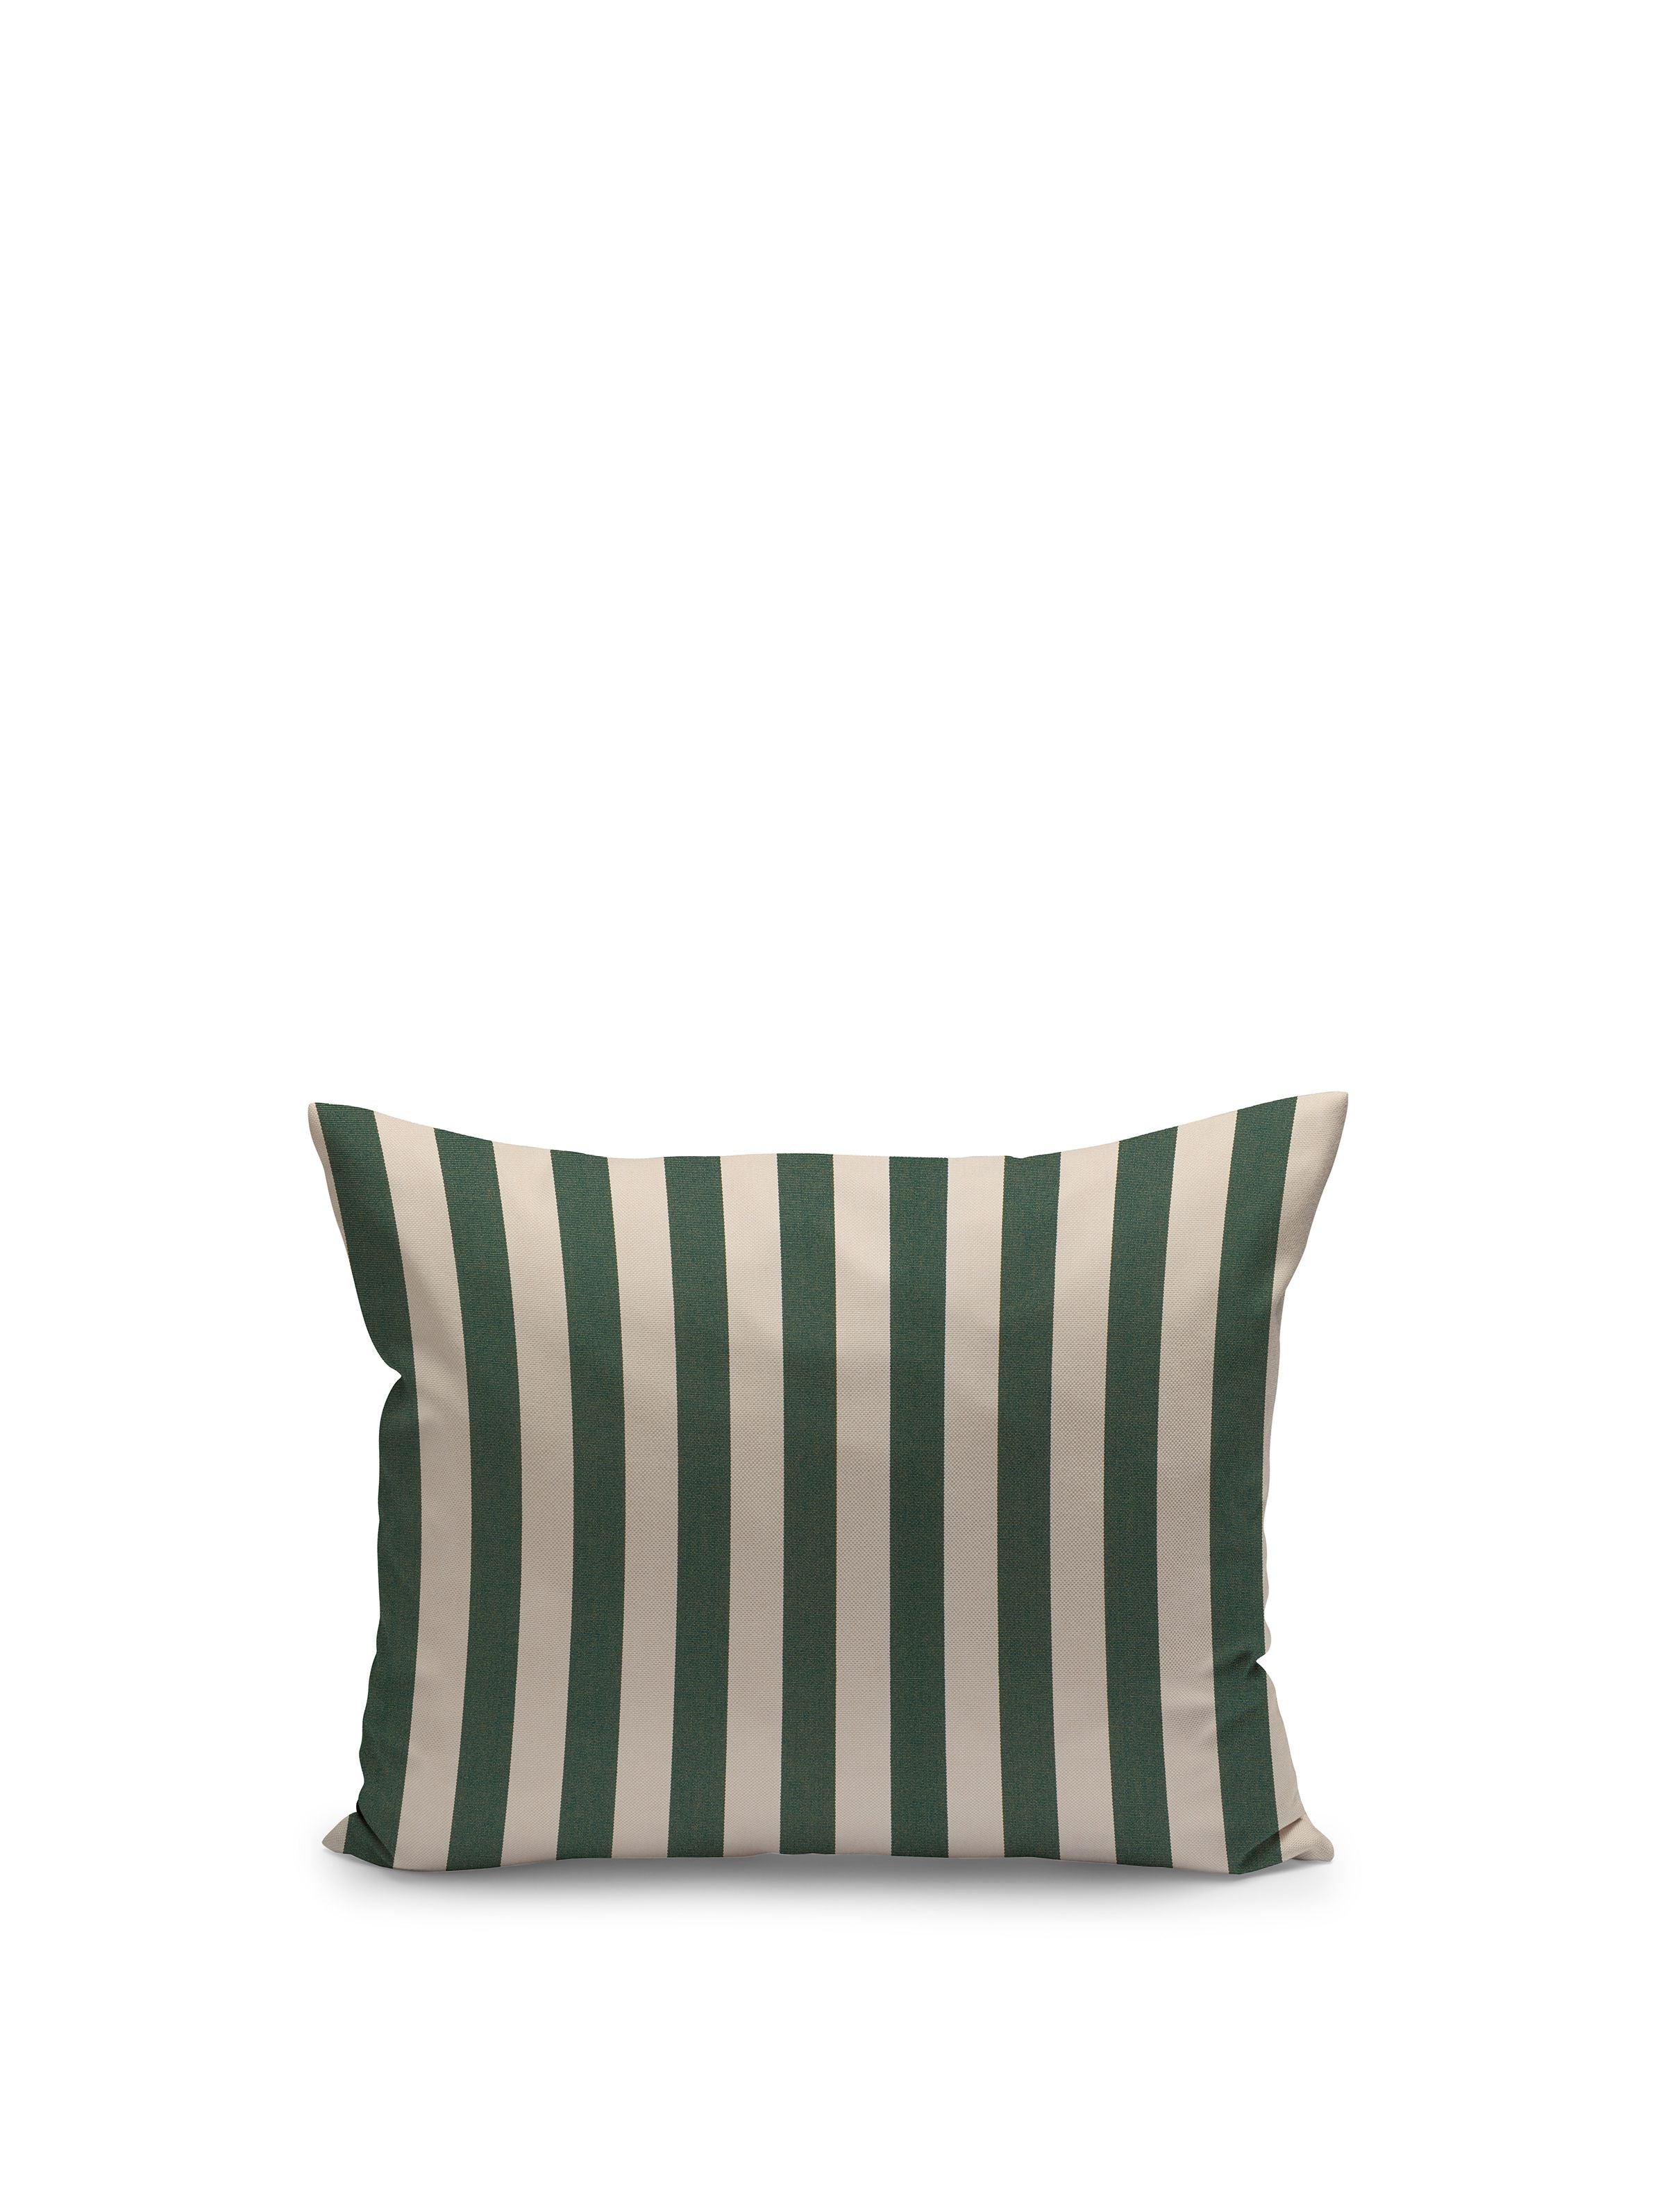 Skagerak Barriere Pillow 60x50 Cm, Light Apricot/Dark Green Stripe